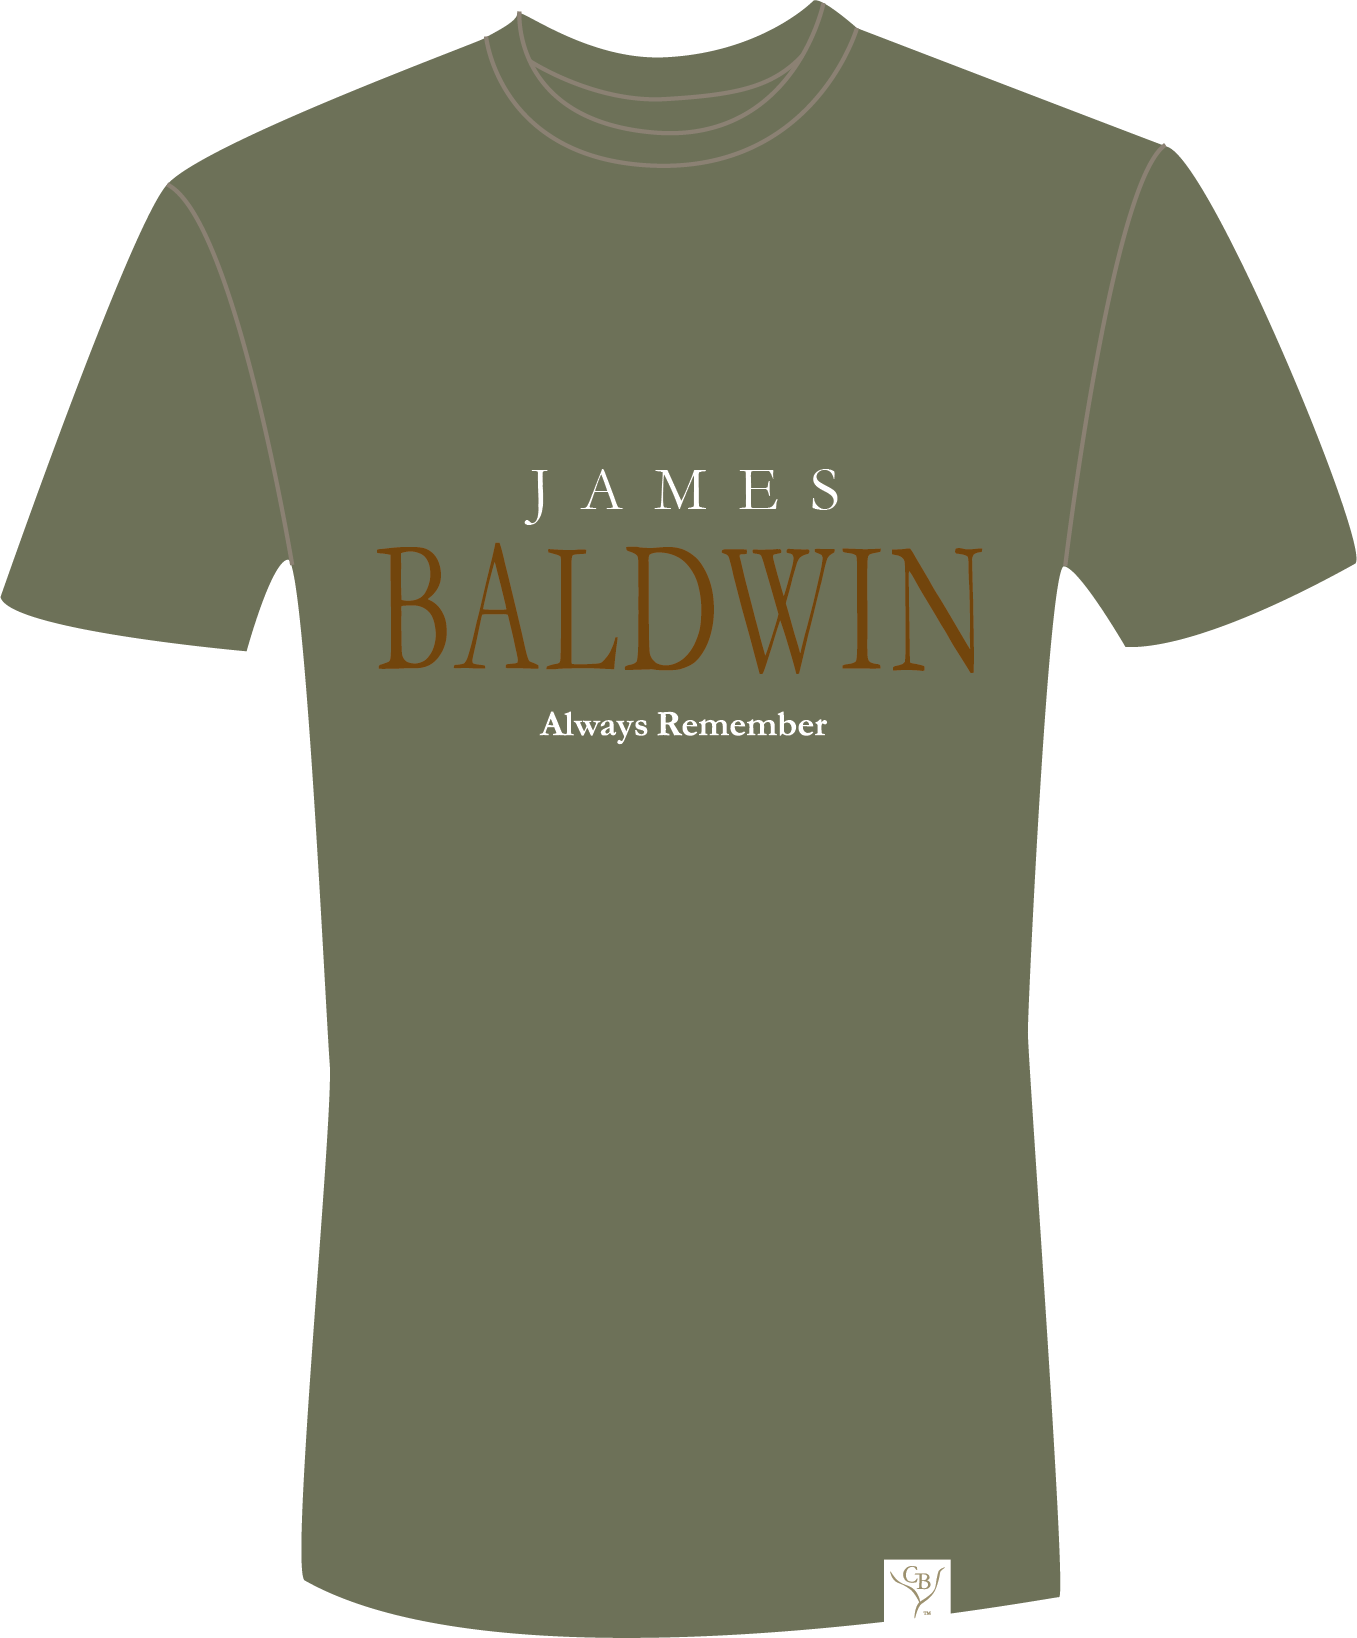 The Baldwin